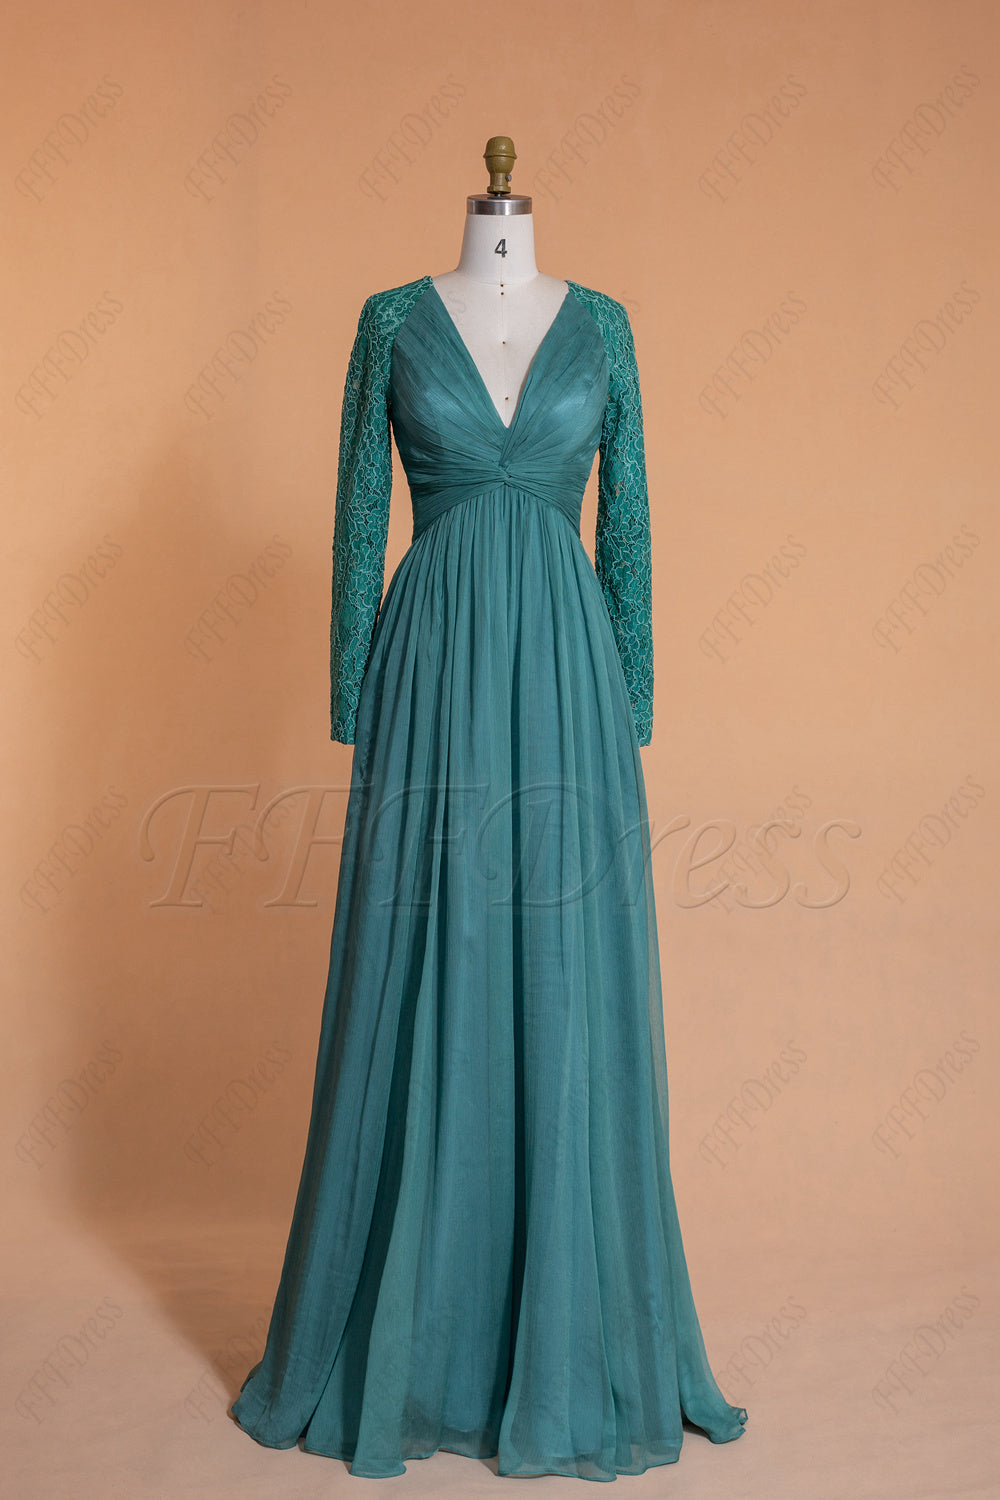 Sea glass green modest bridesmaid dresses long sleeves